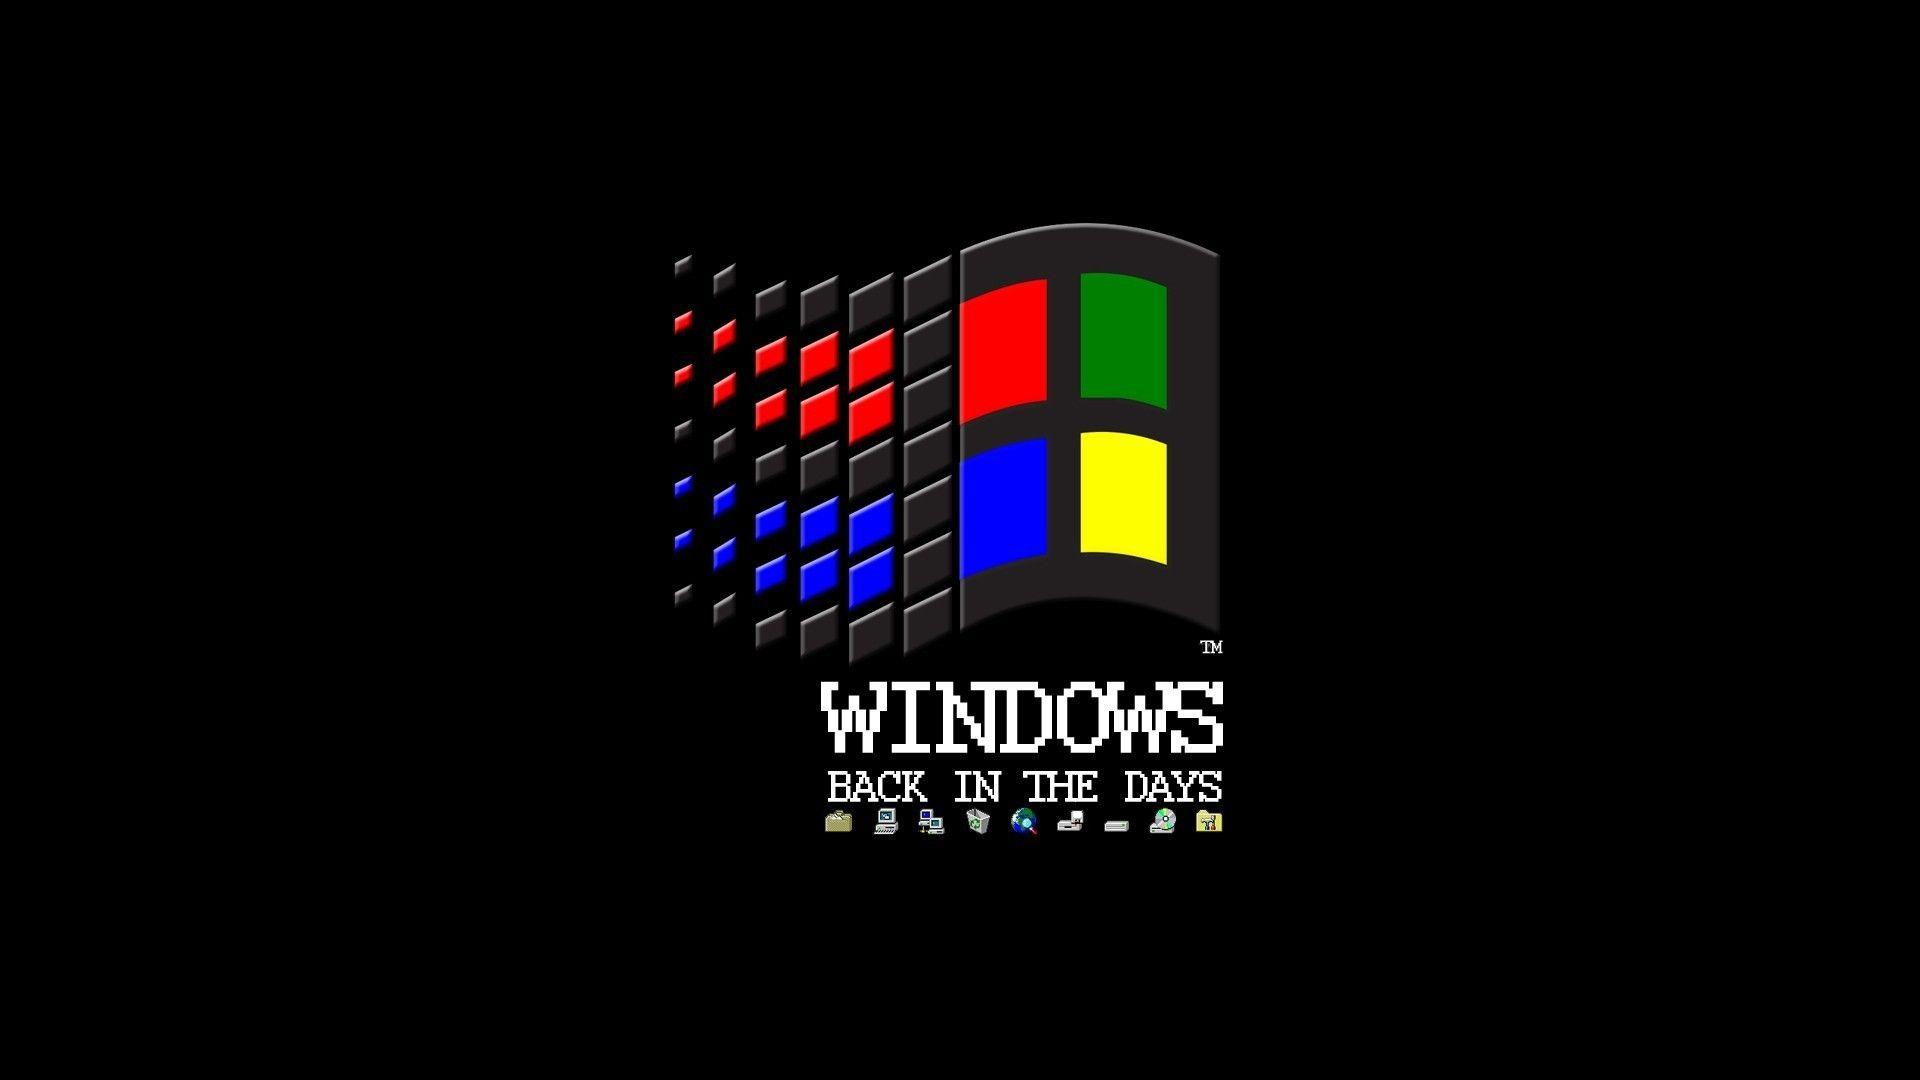 Custom Windows 98 Wallpaper by TopSecretDesigns on DeviantArt